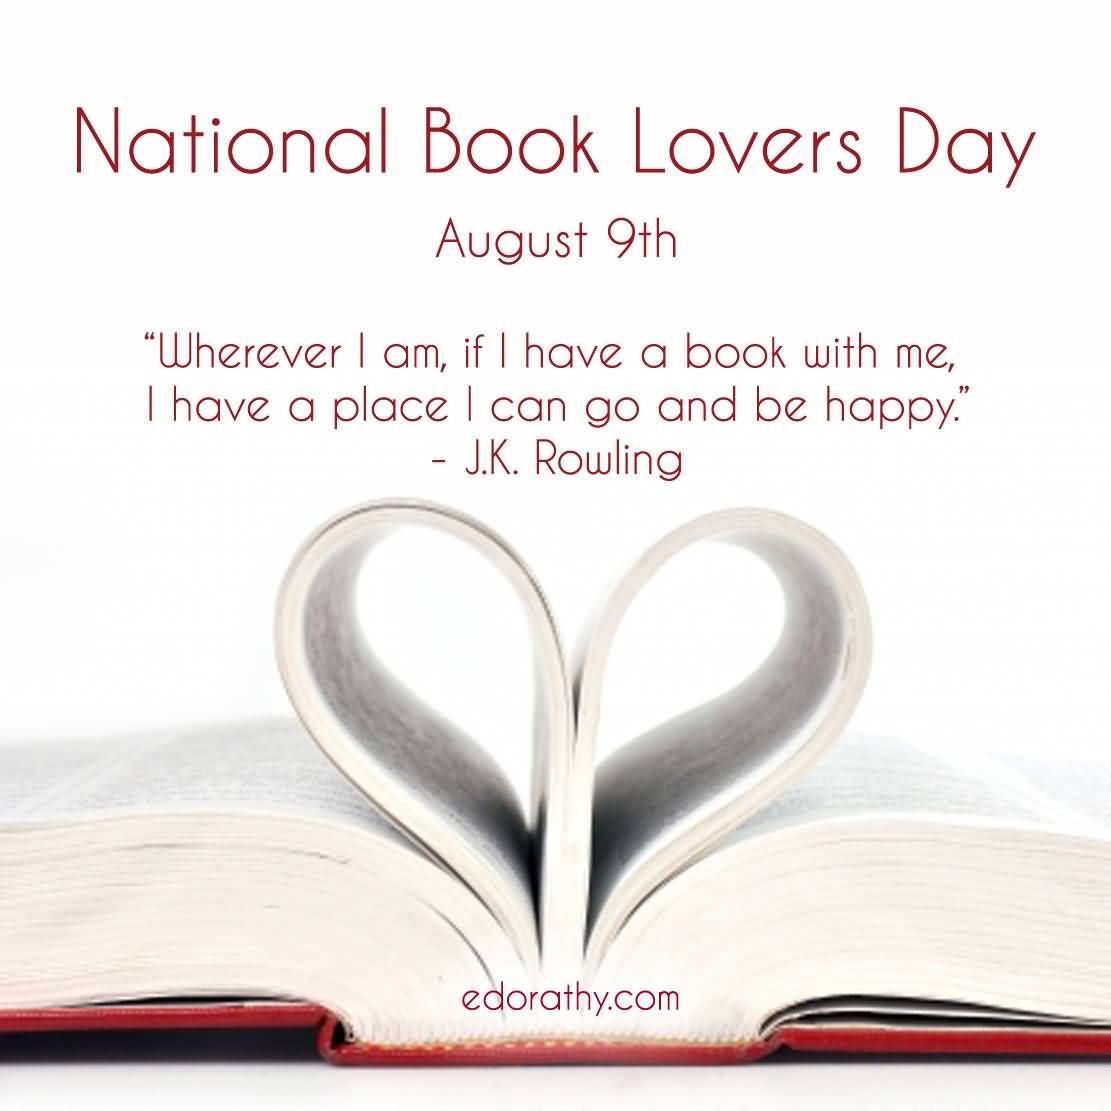 https://www.askideas.com/media/87/National-Book-Lovers-Day-August-9th.jpg